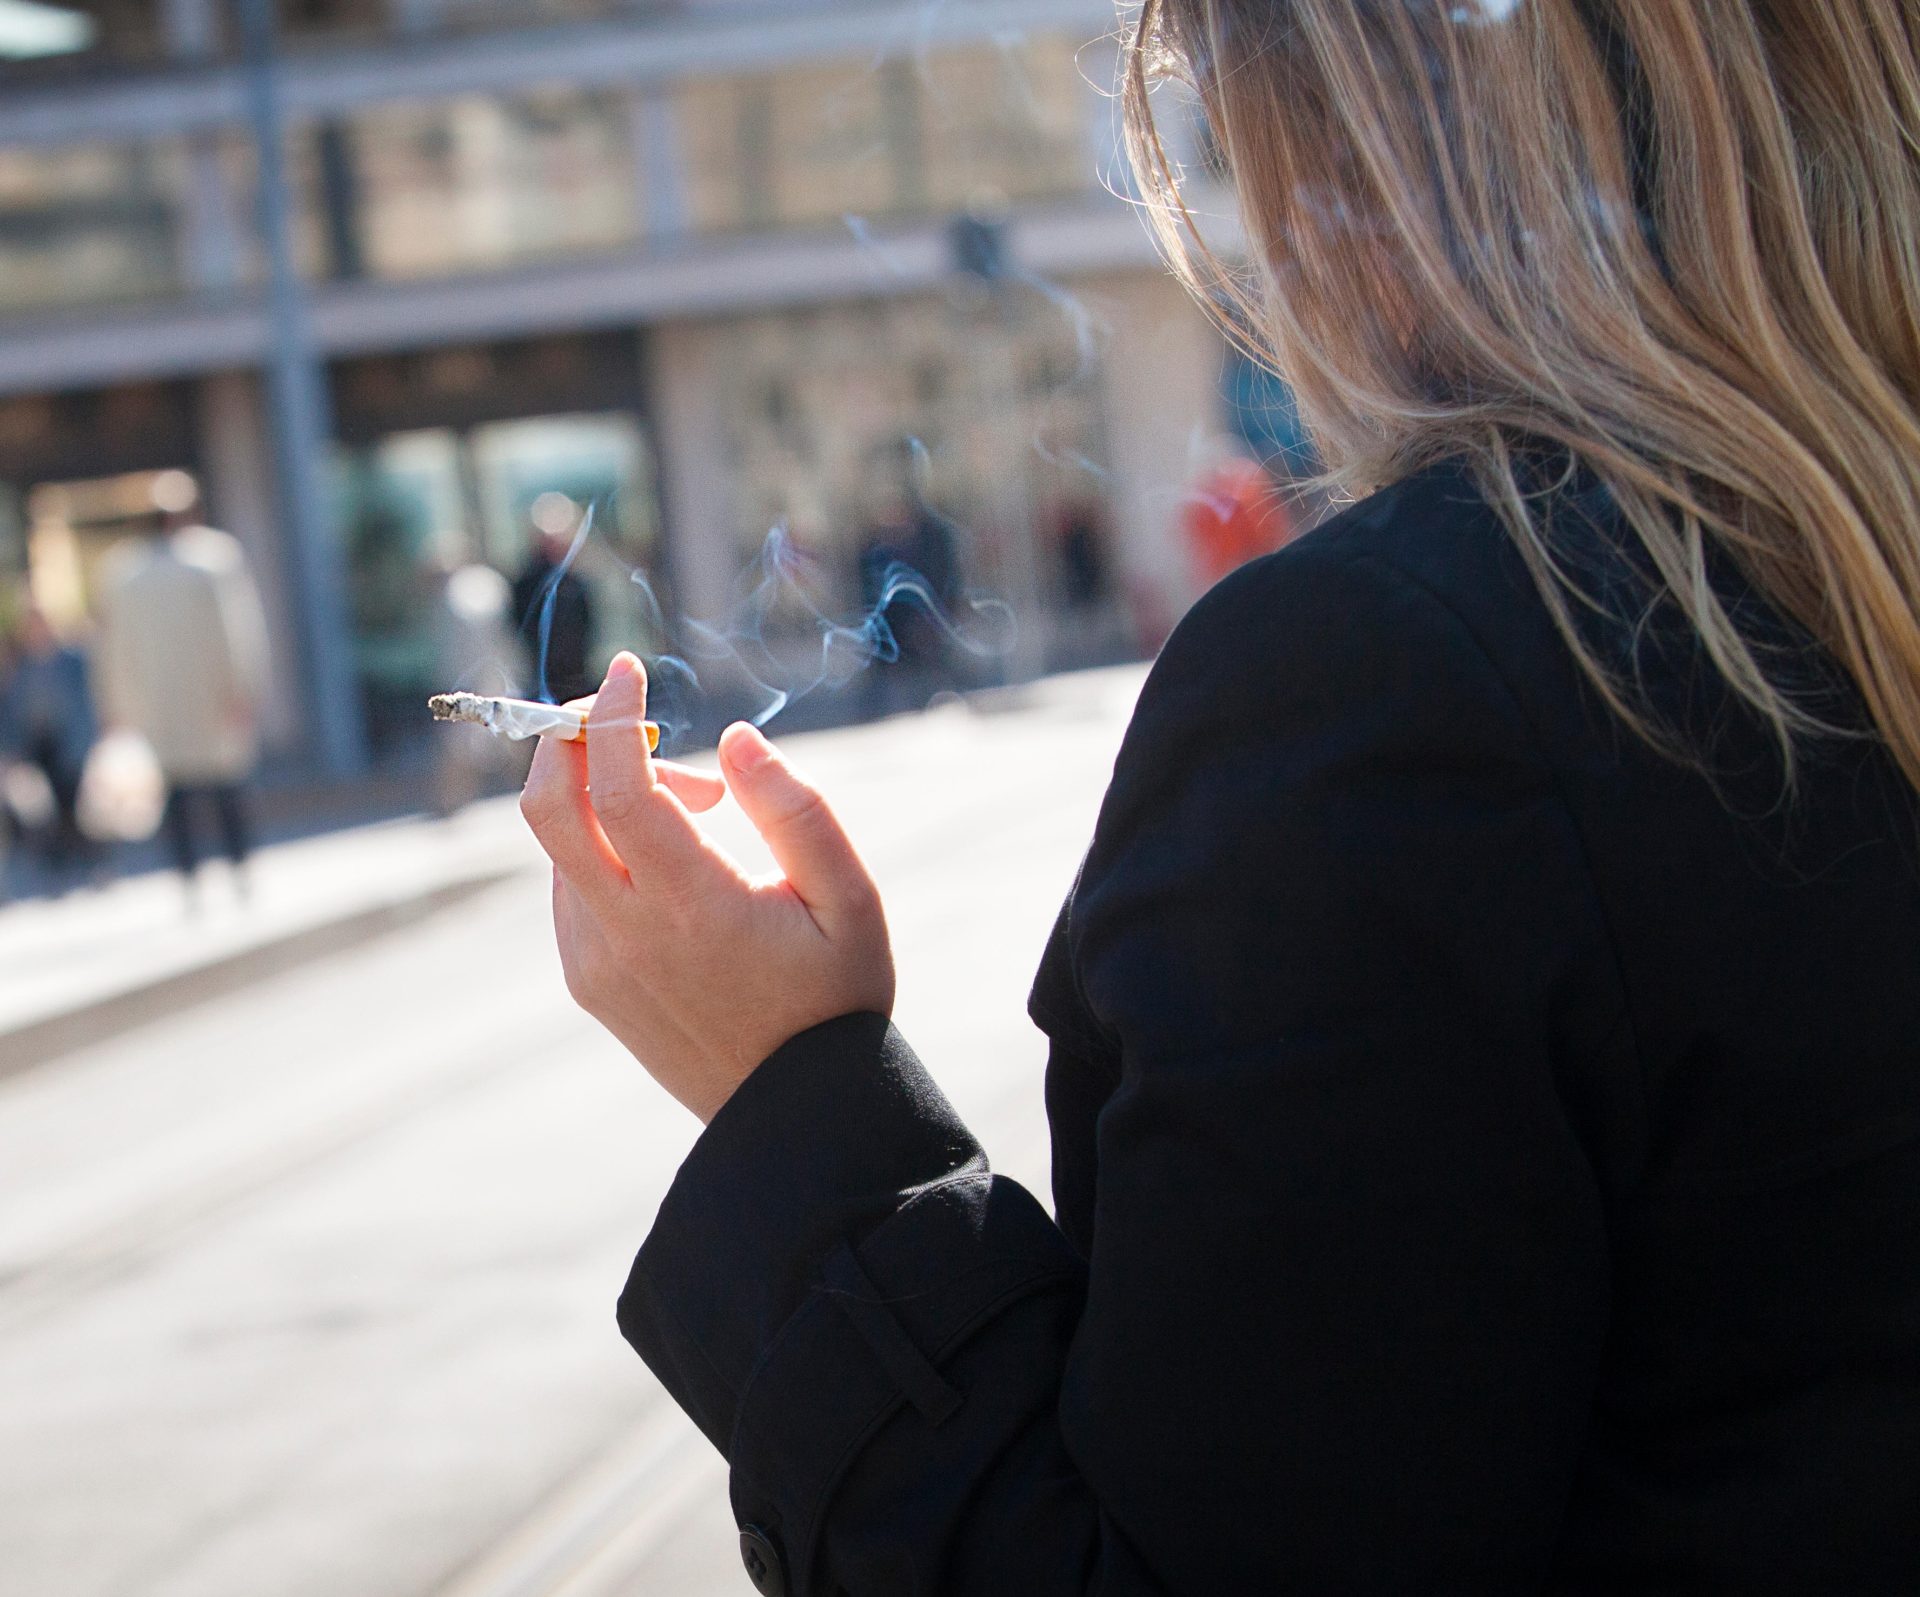 File photo shows a woman smoking.